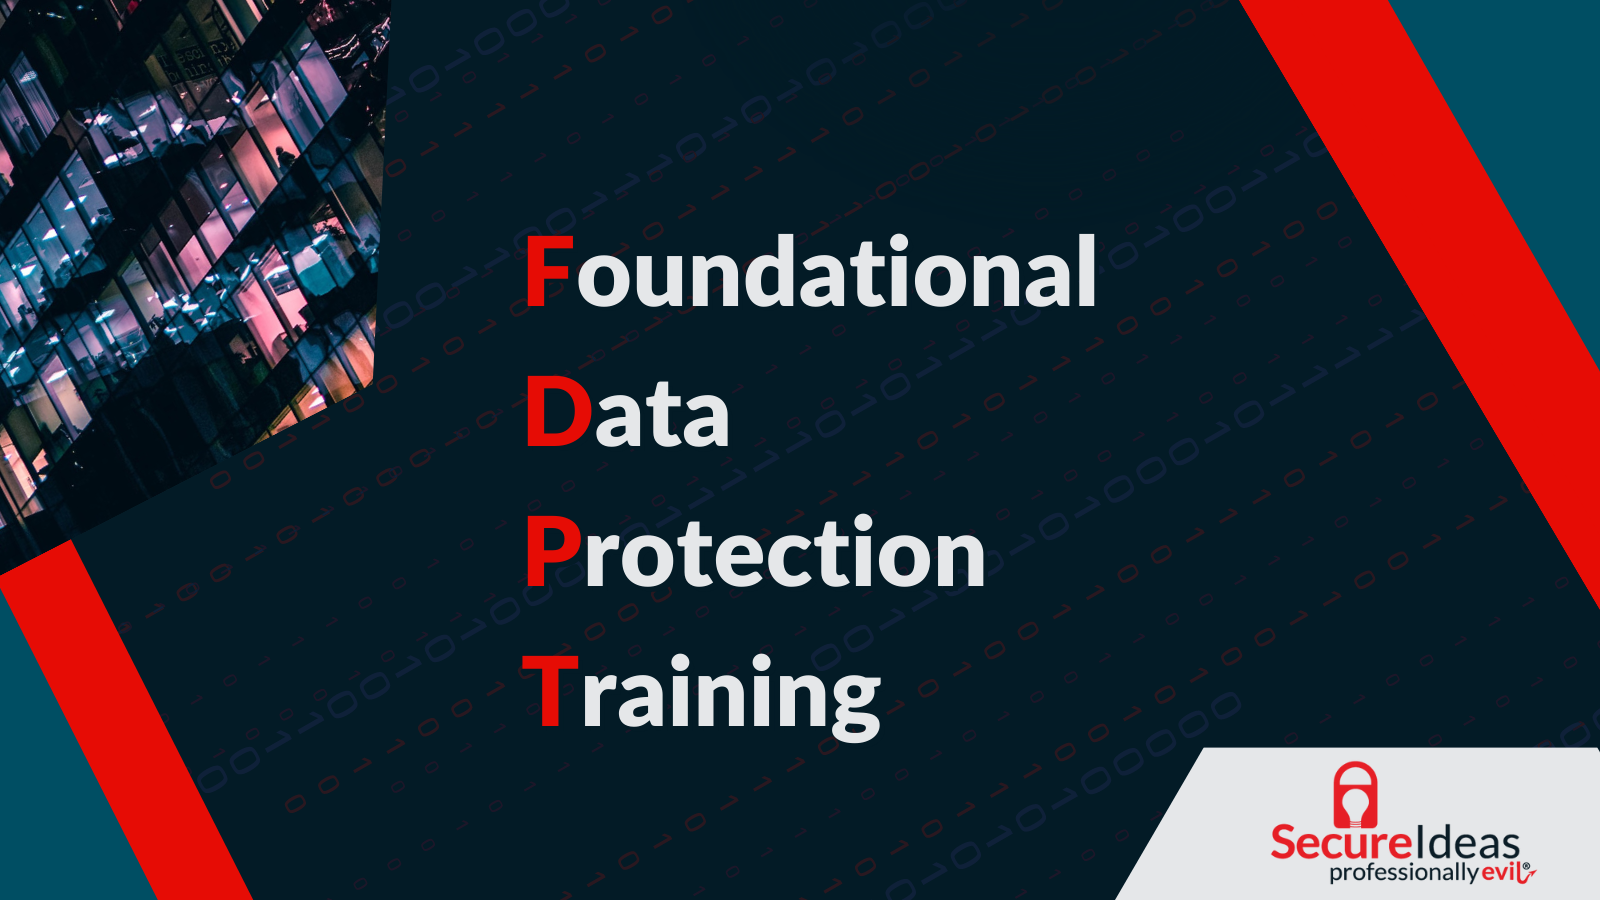 Foundational Data Protection Training (FDPT)